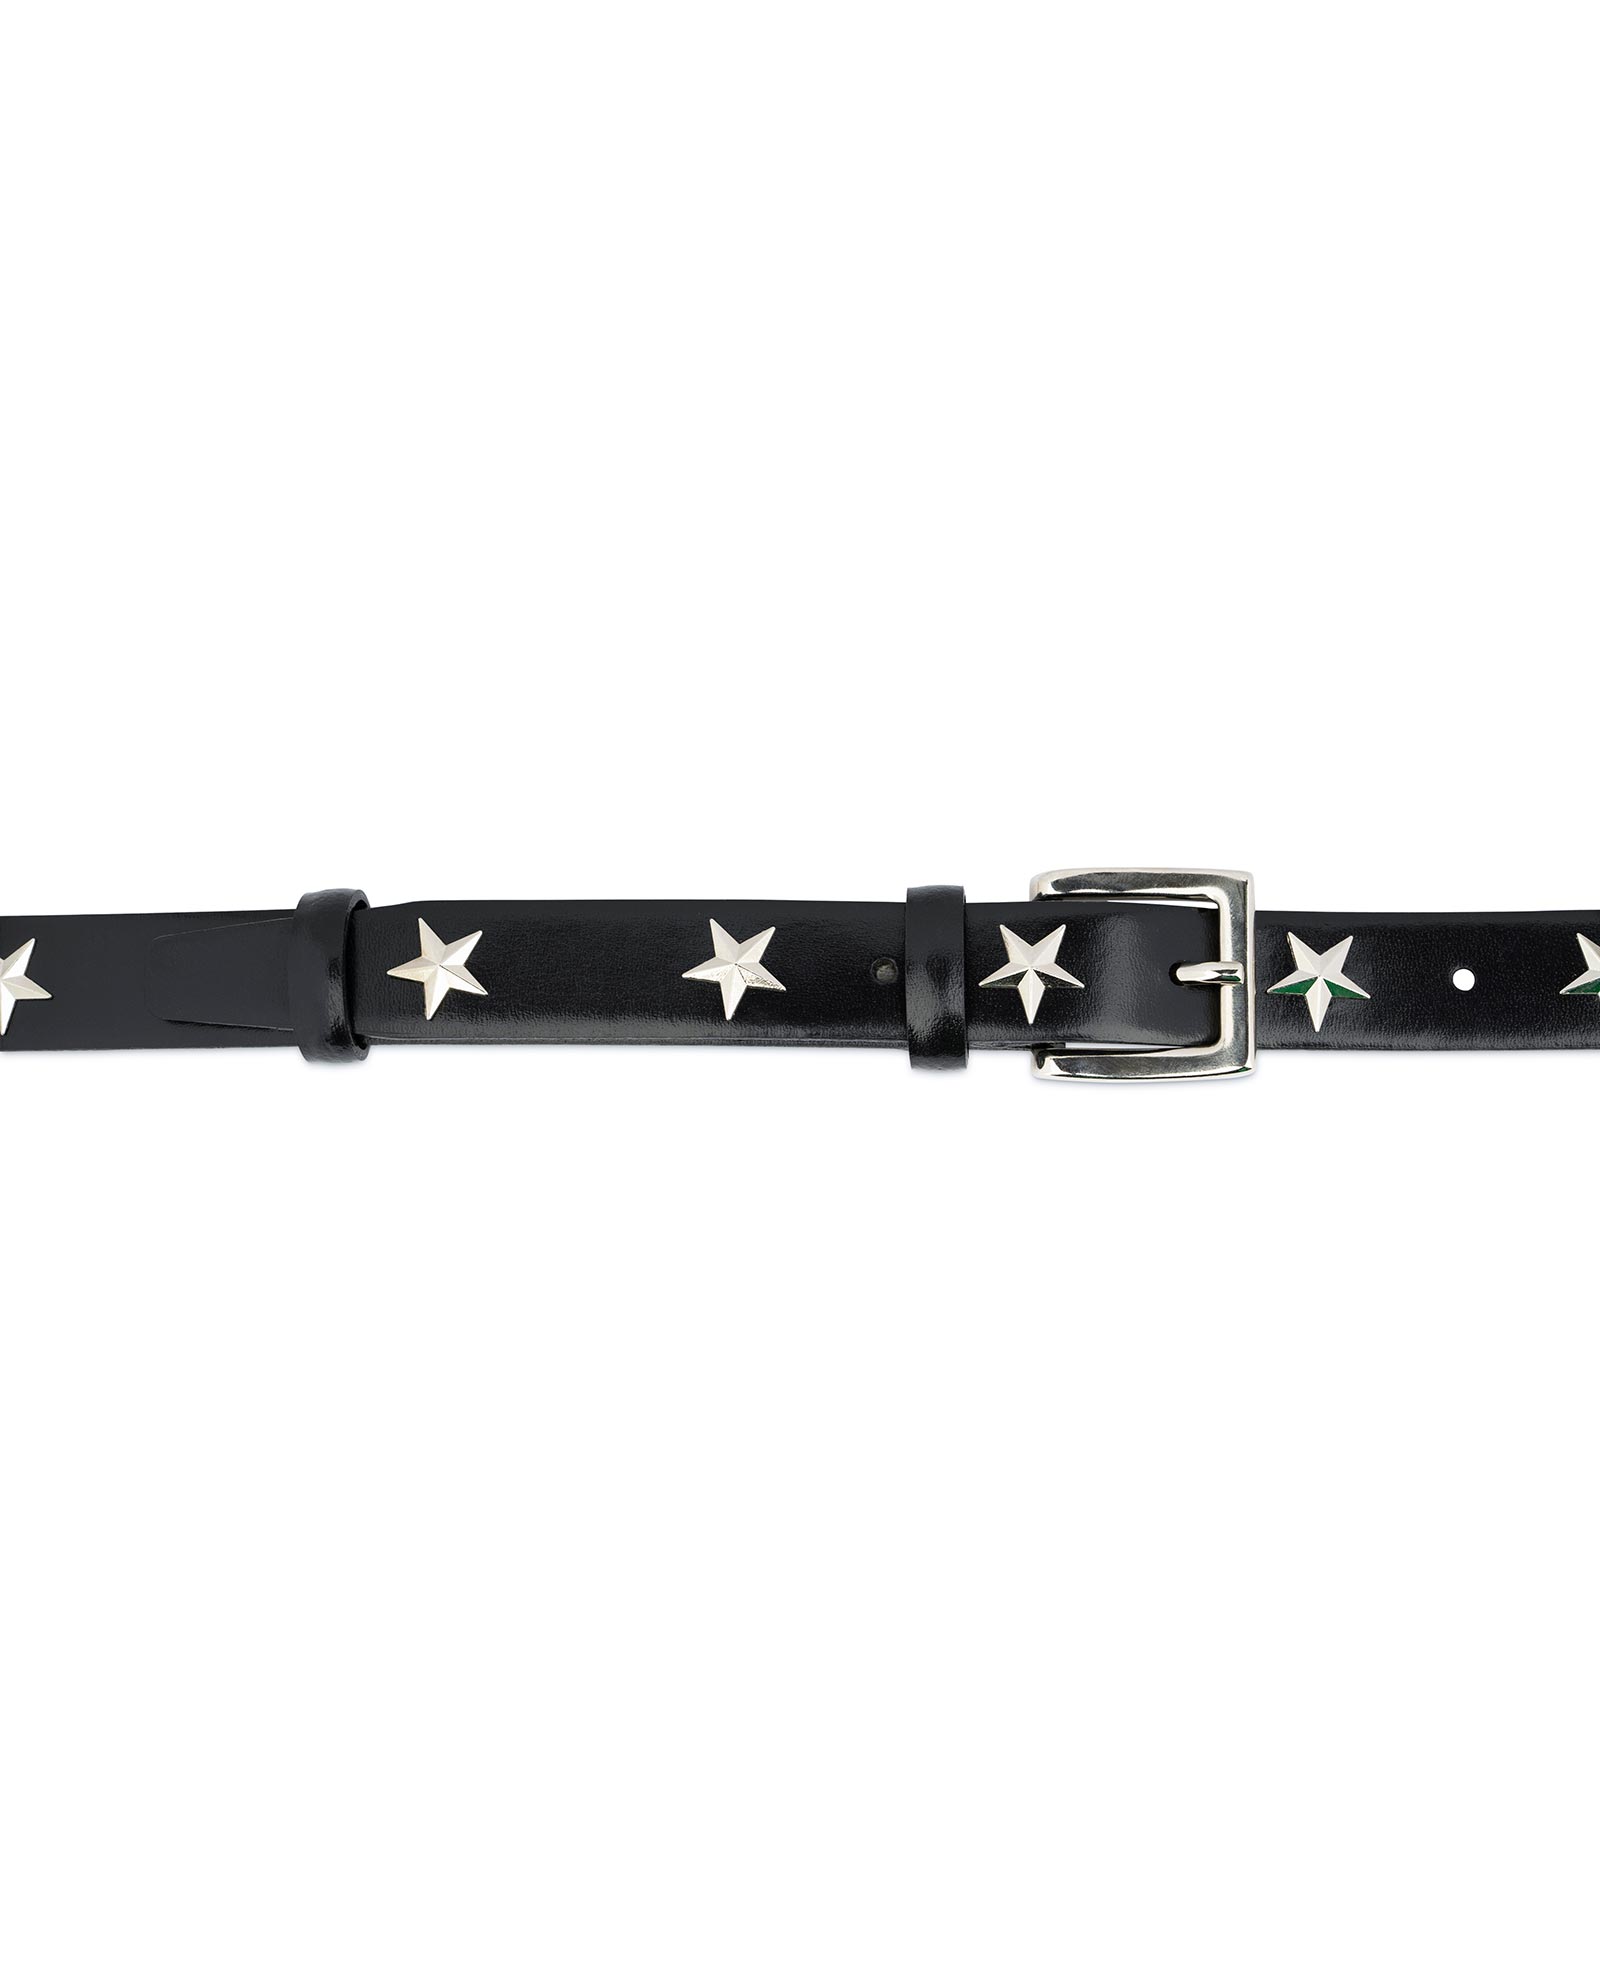 Buy Black Studded Belt With Stars | LeatherBeltsOnline.com